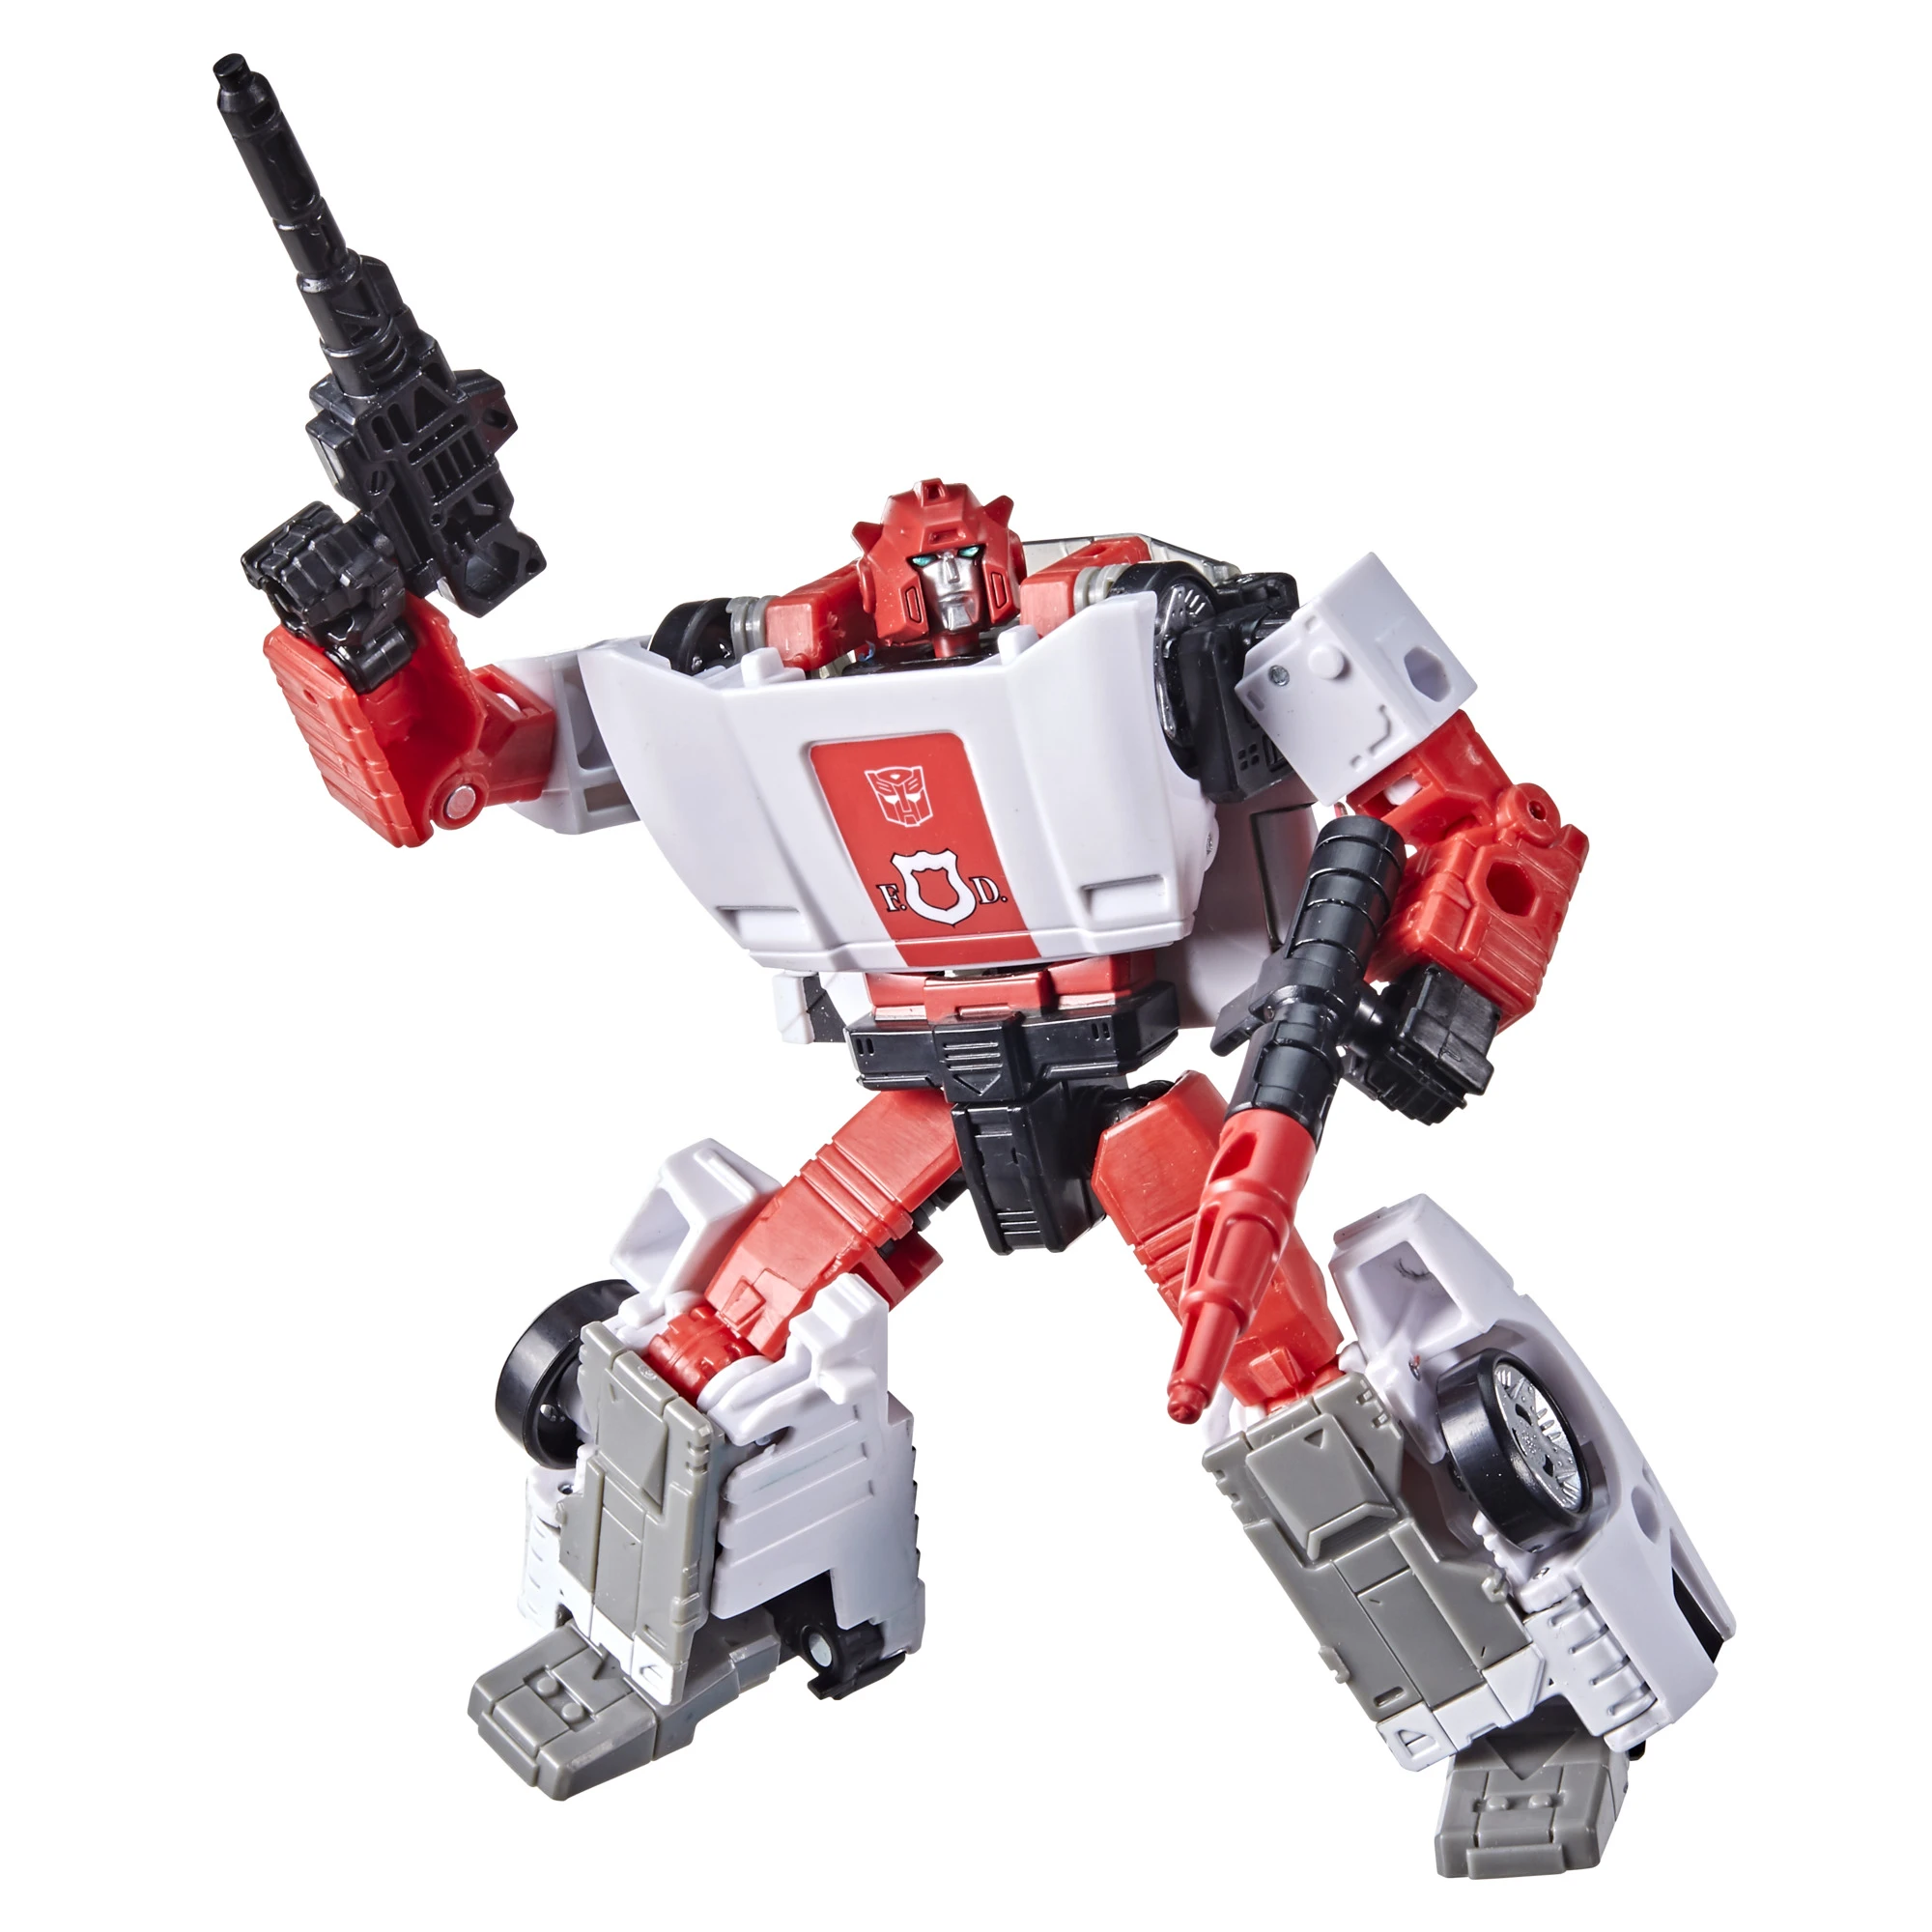 Hasbro Transformers Cyber Battalion Walgreens Bumblebee Robot Action Figures Toy 